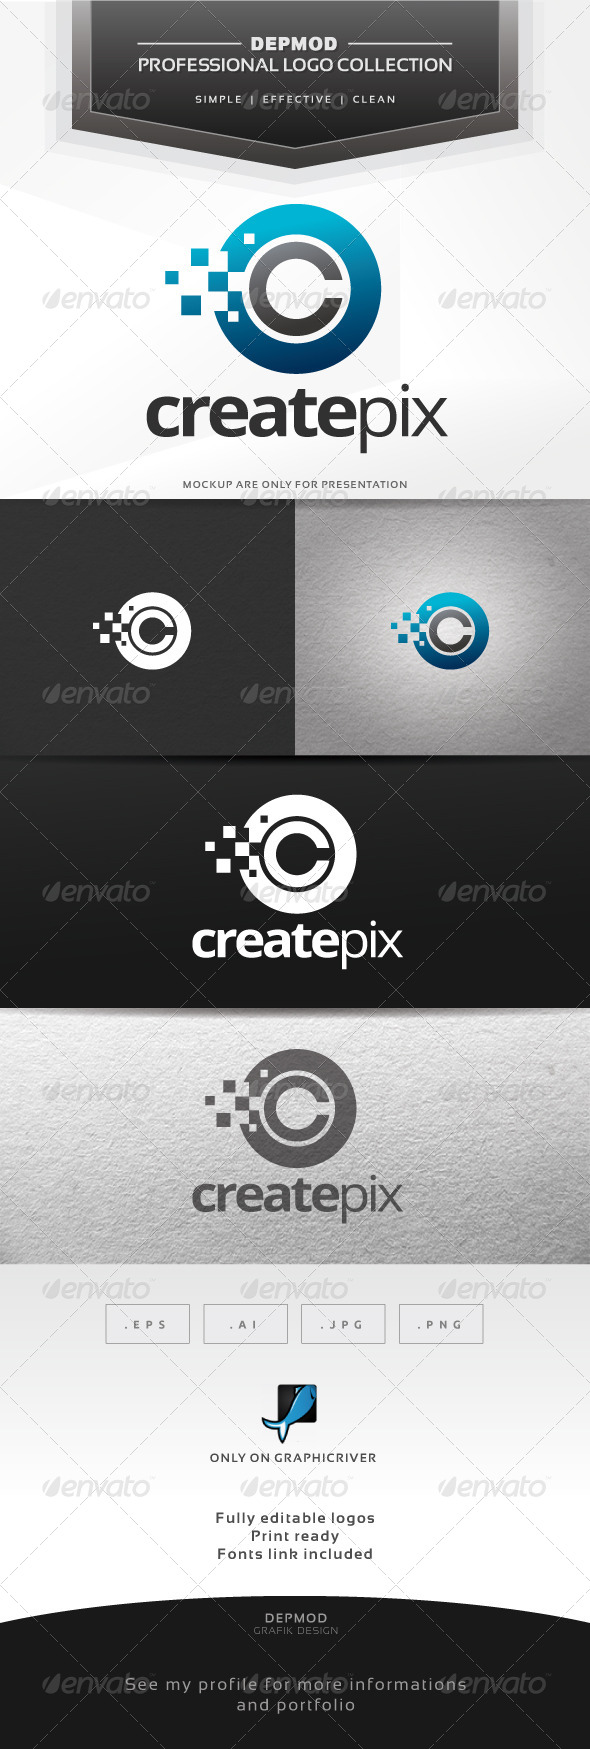 Create Pix Logo